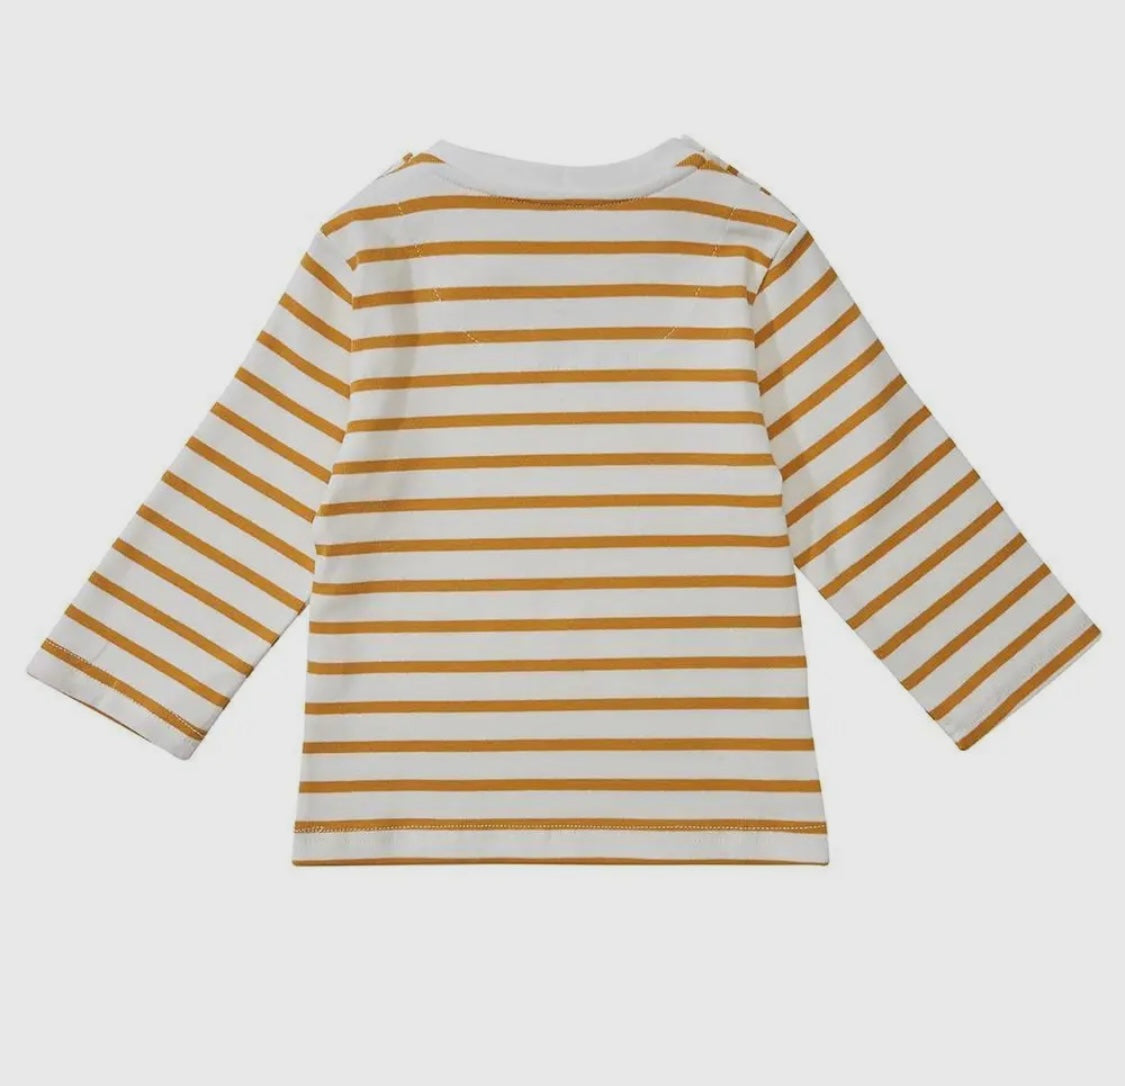 Kids dotty dungaree breton yellow ochre white stripes bold white collar cotton jersey mix shoulder poppers snaps